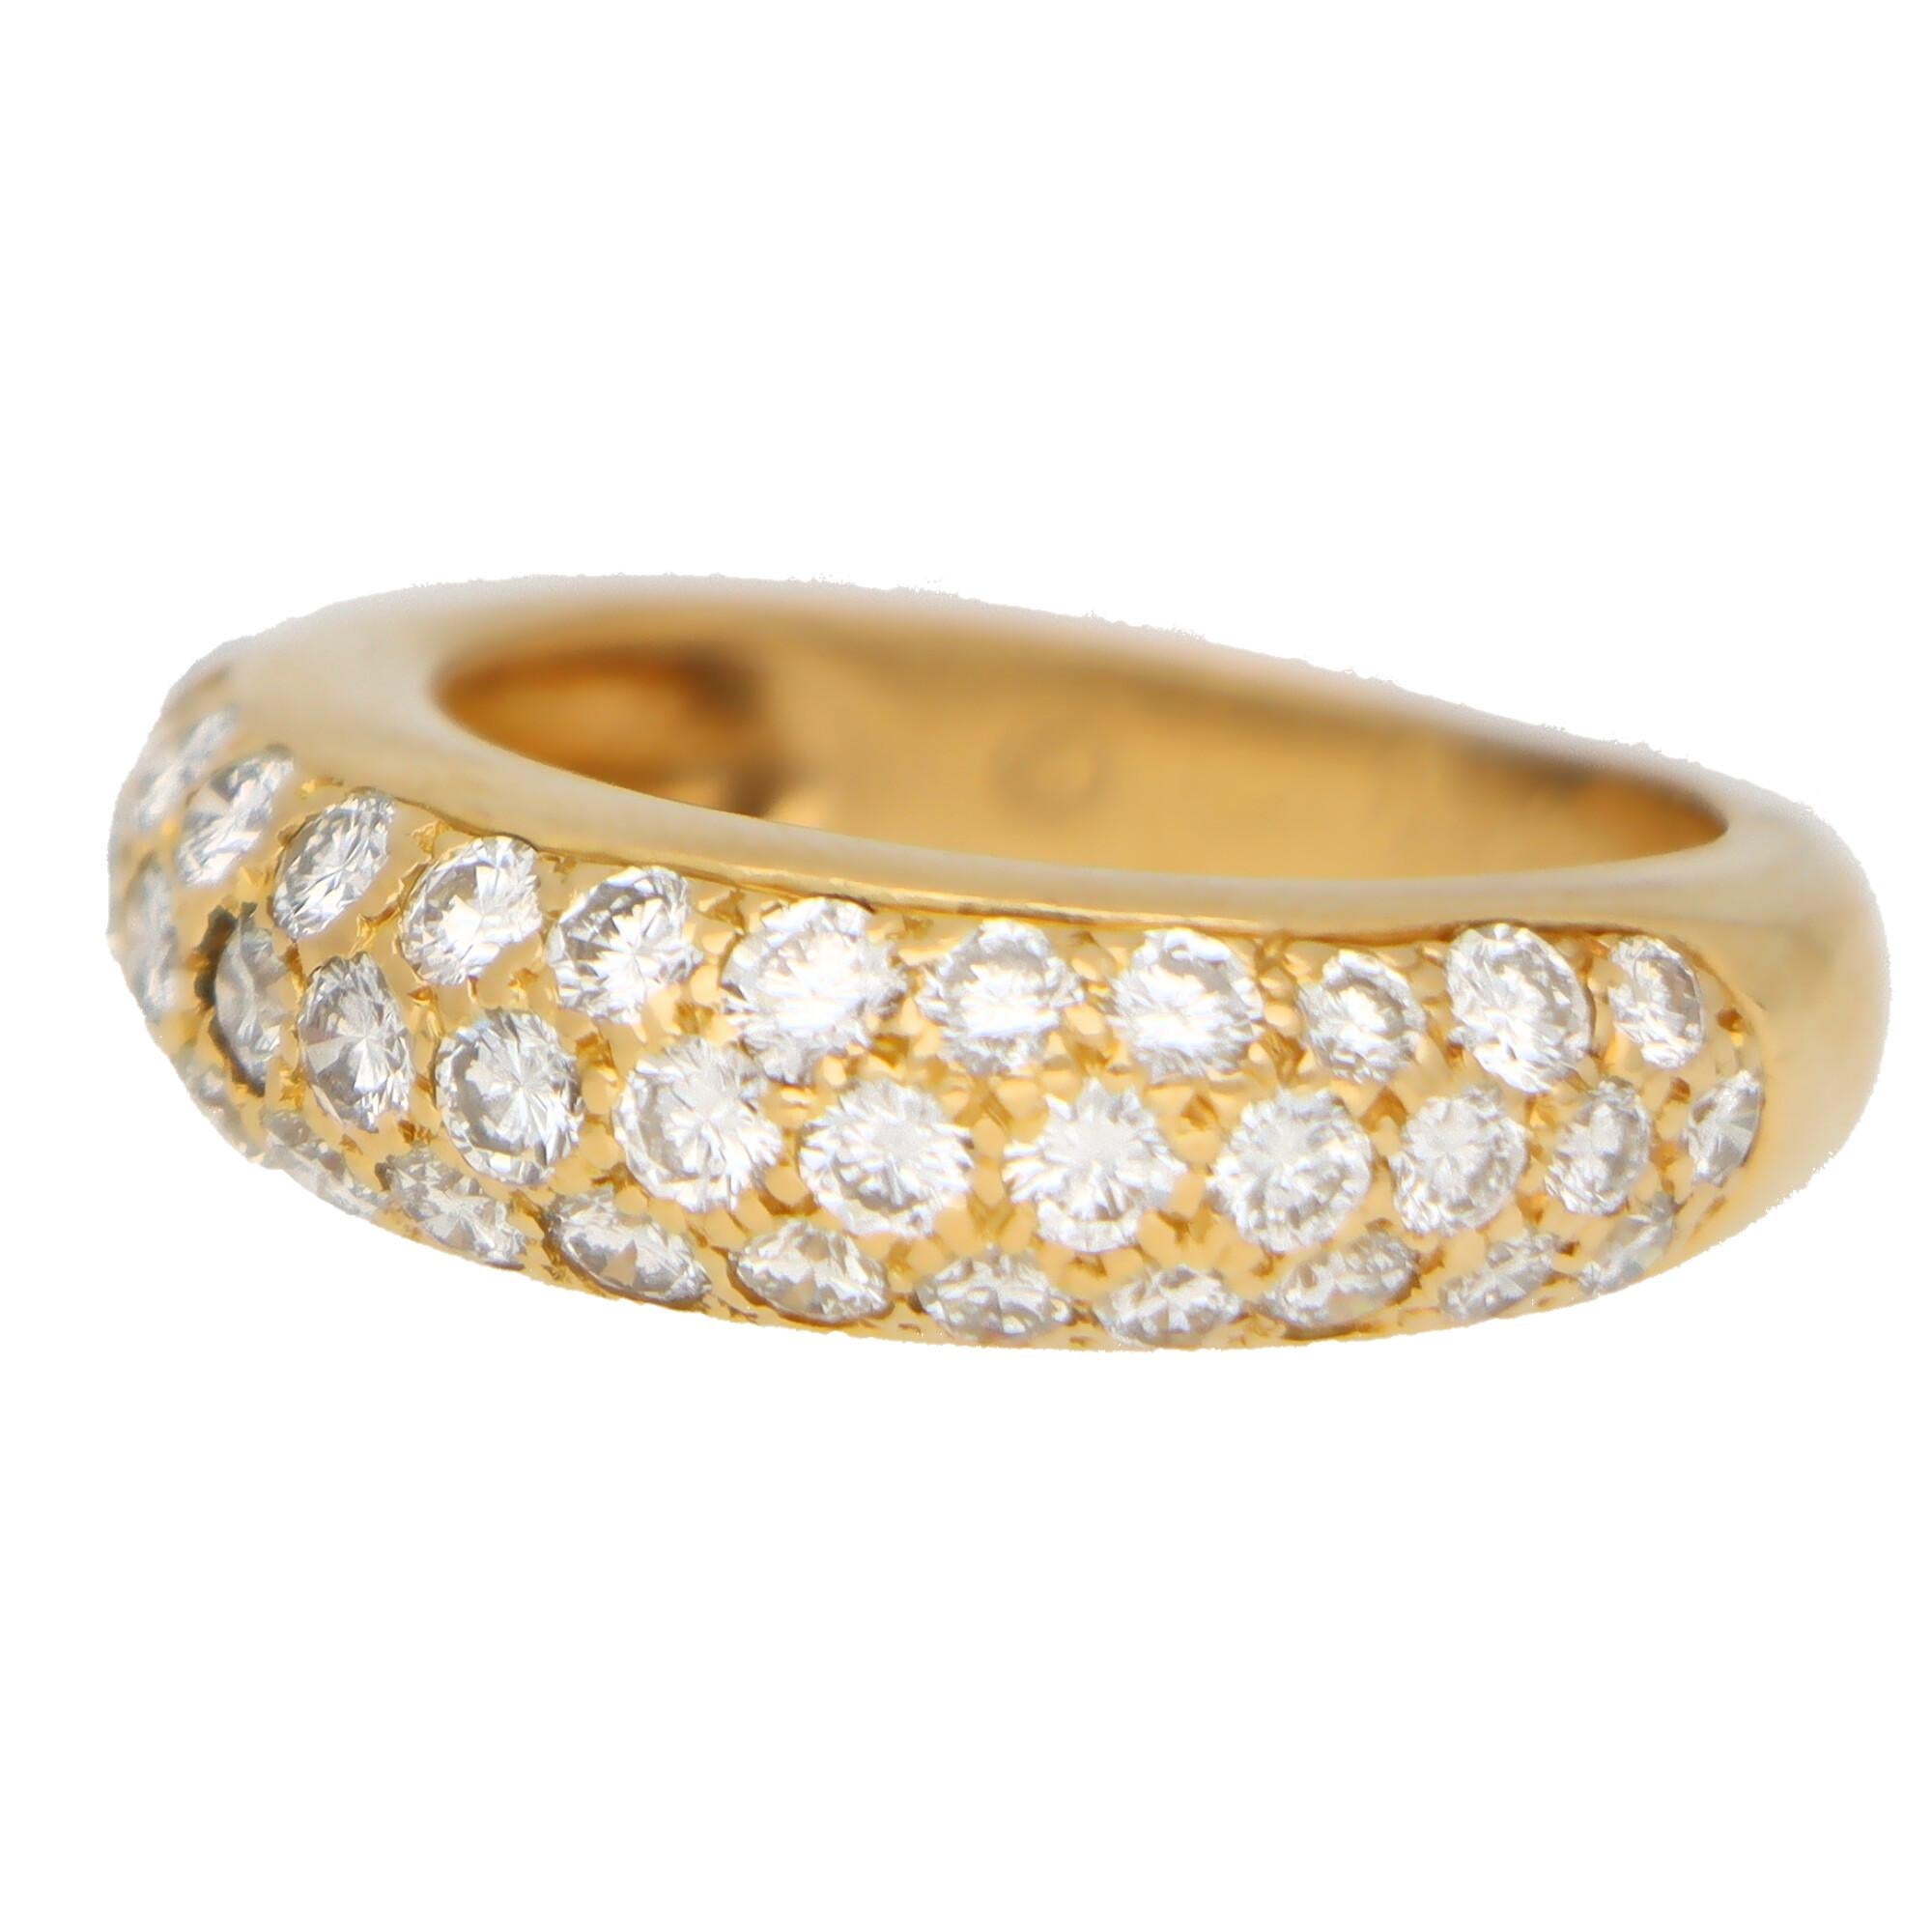 Round Cut Vintage Cartier Diamond Mimi Bombe Ring Set in 18k Yellow Gold